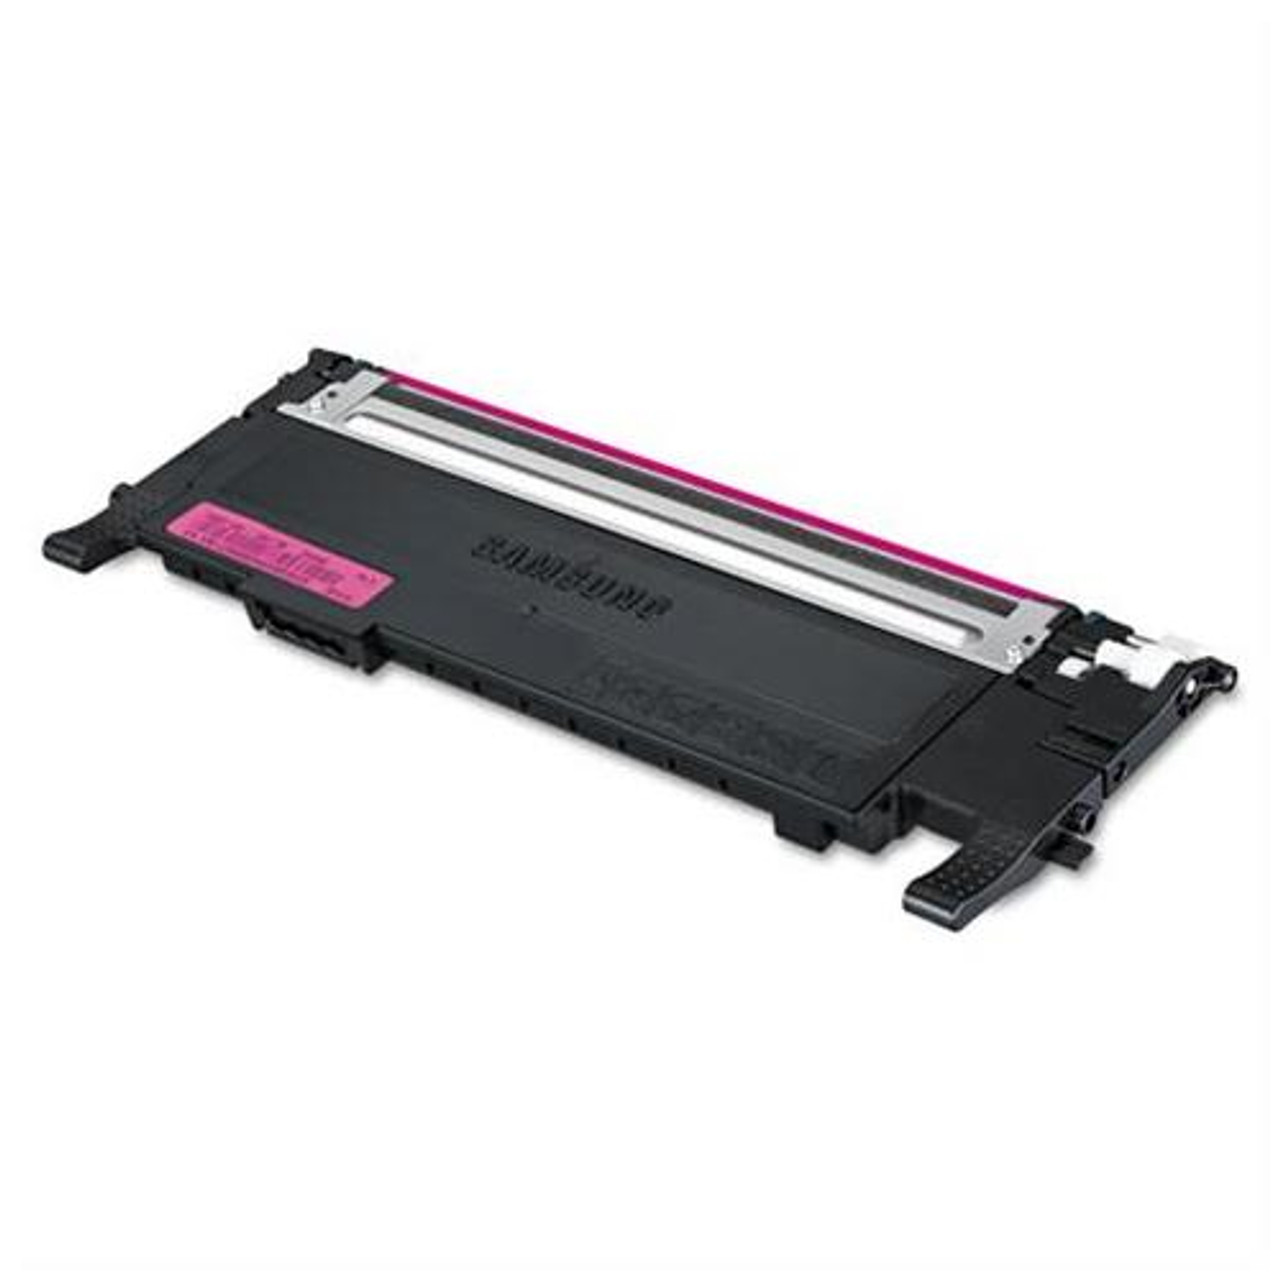 CLPM600A Samsung Printer Ink Cart Toner